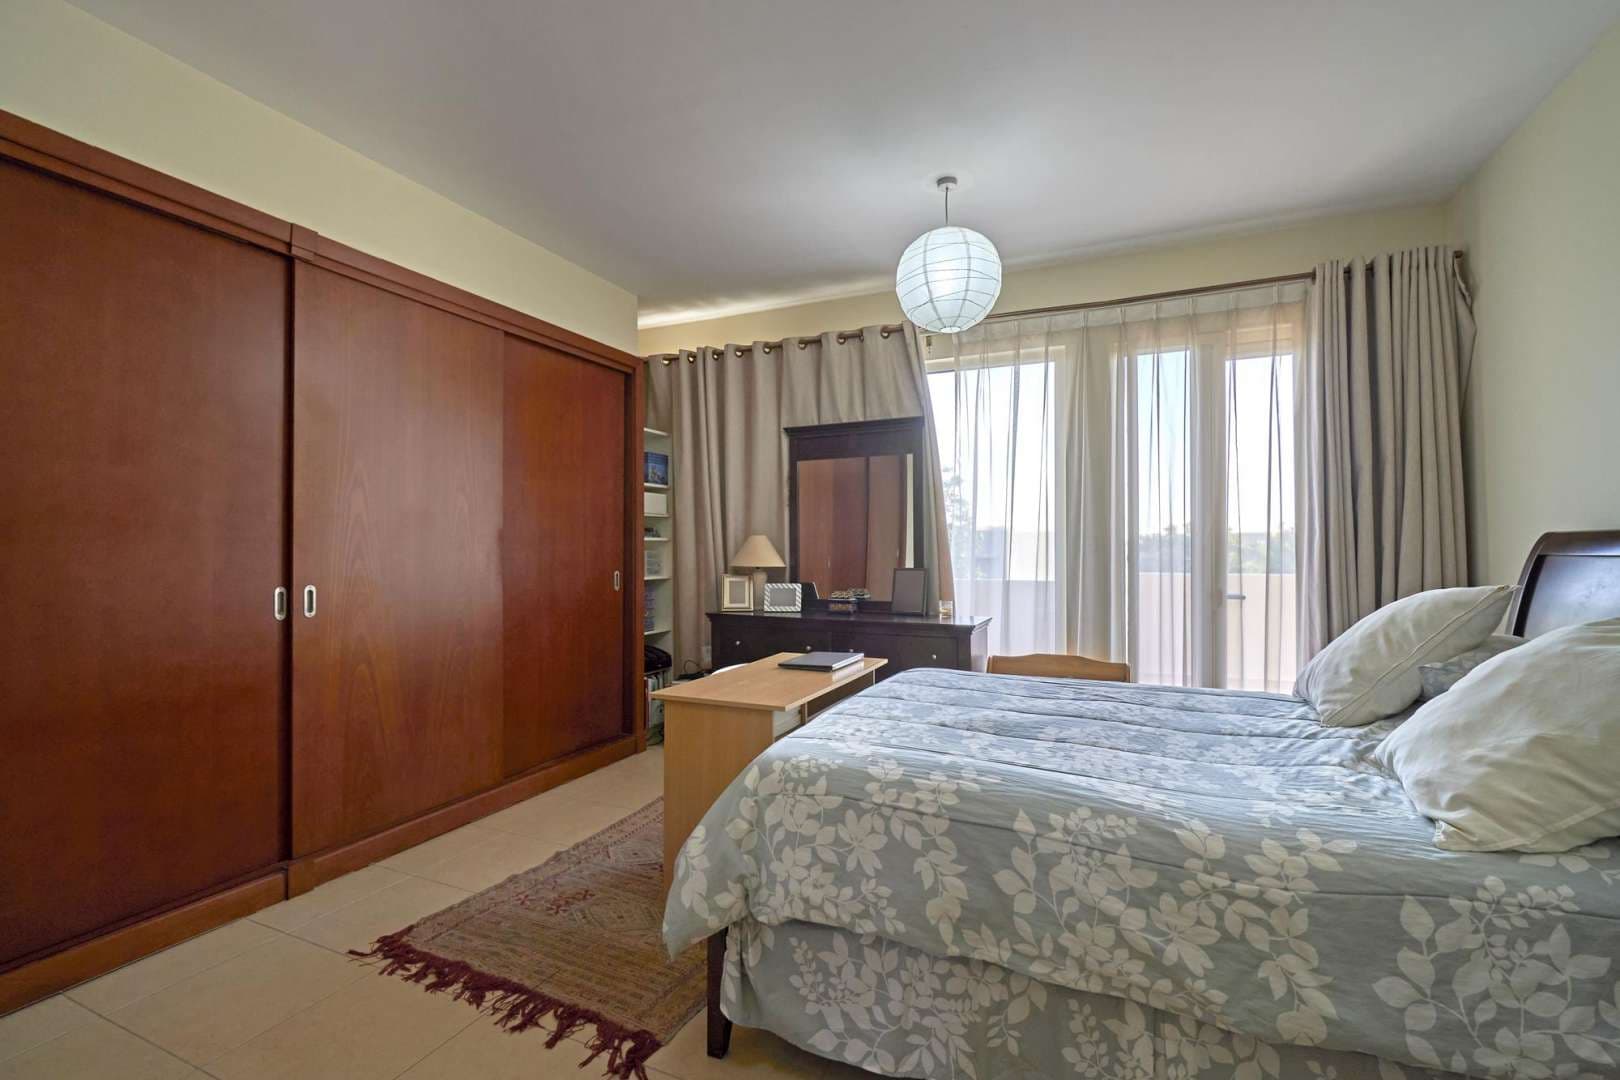 3 Bedroom Villa For Rent Savannah Lp05749 2ccae2e5b1ebca00.jpg